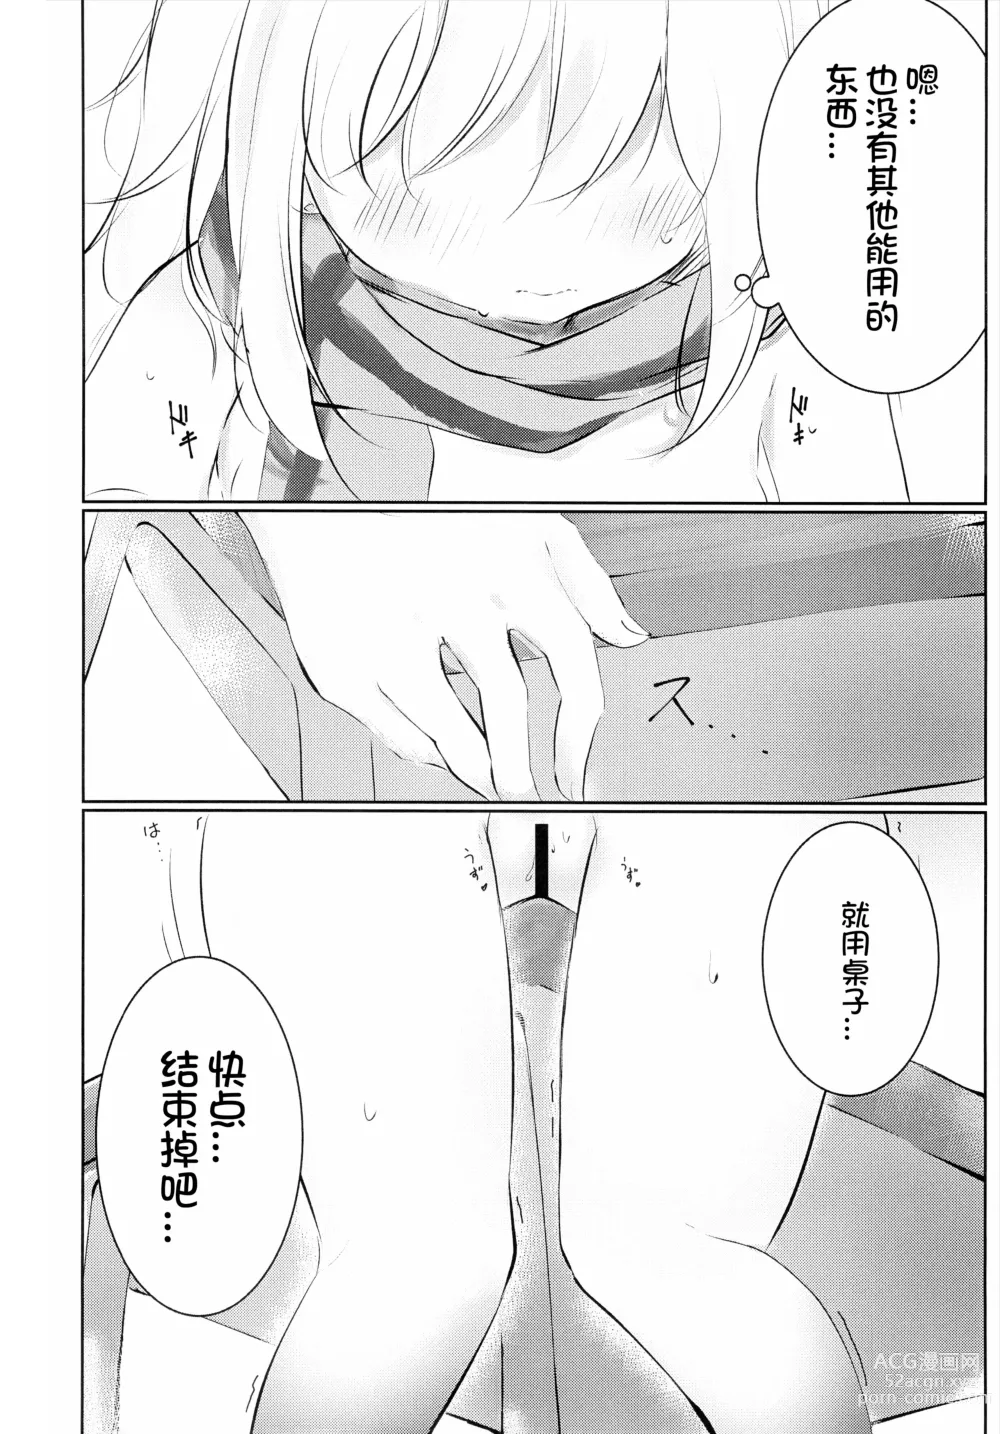 Page 8 of doujinshi Hakusyoku Aisei